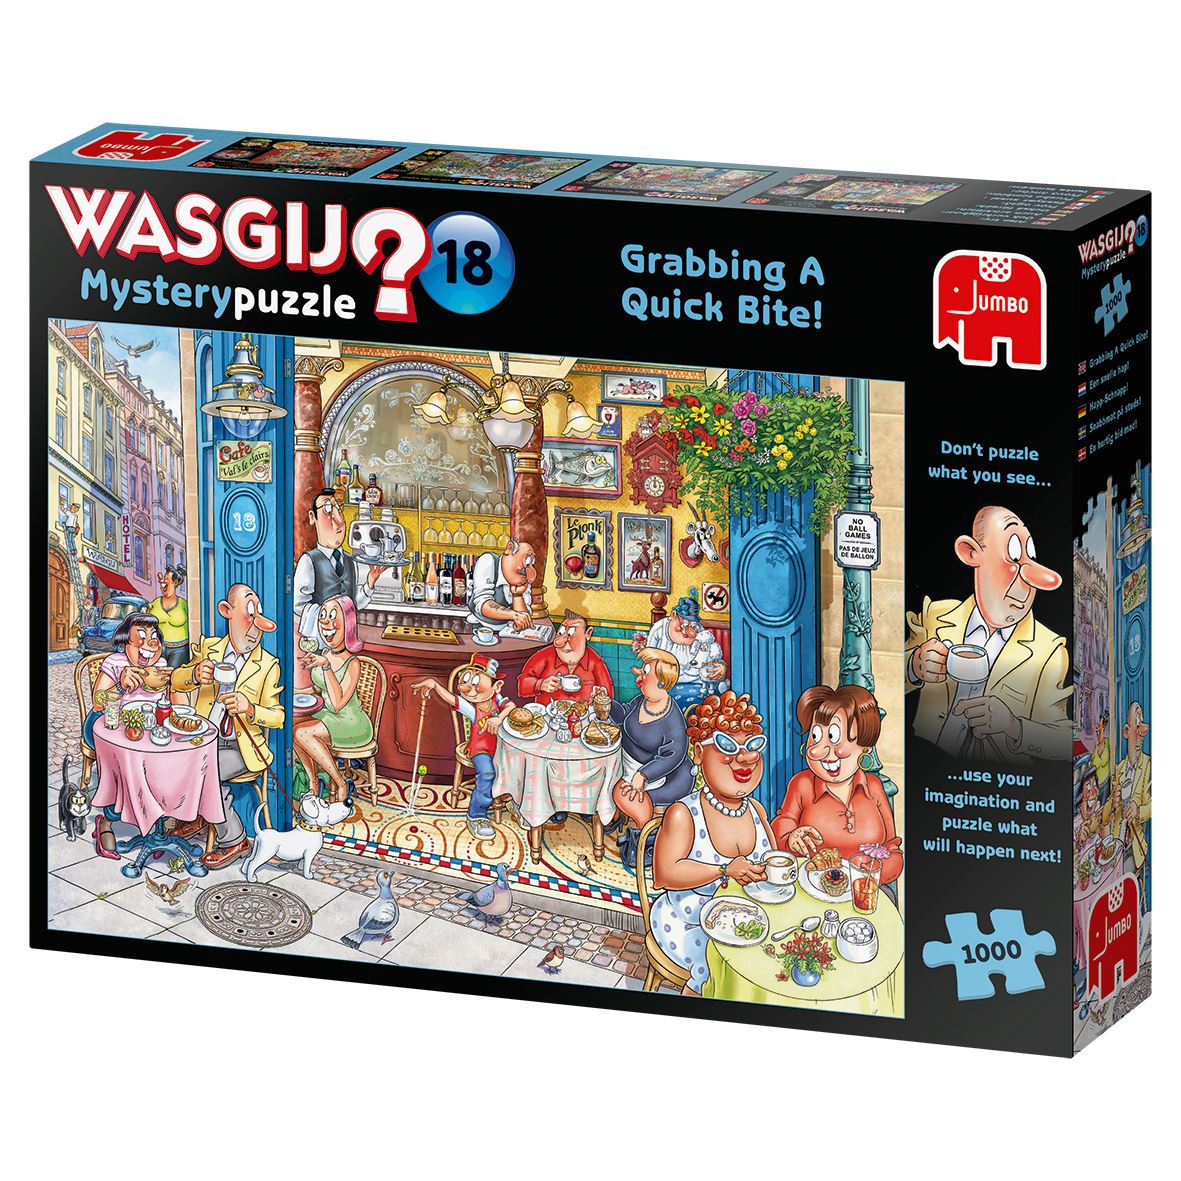 Wasgij 'Mystery 18 Grabbing A Quick Bite 1000 Piece Jigsaw Puzzle